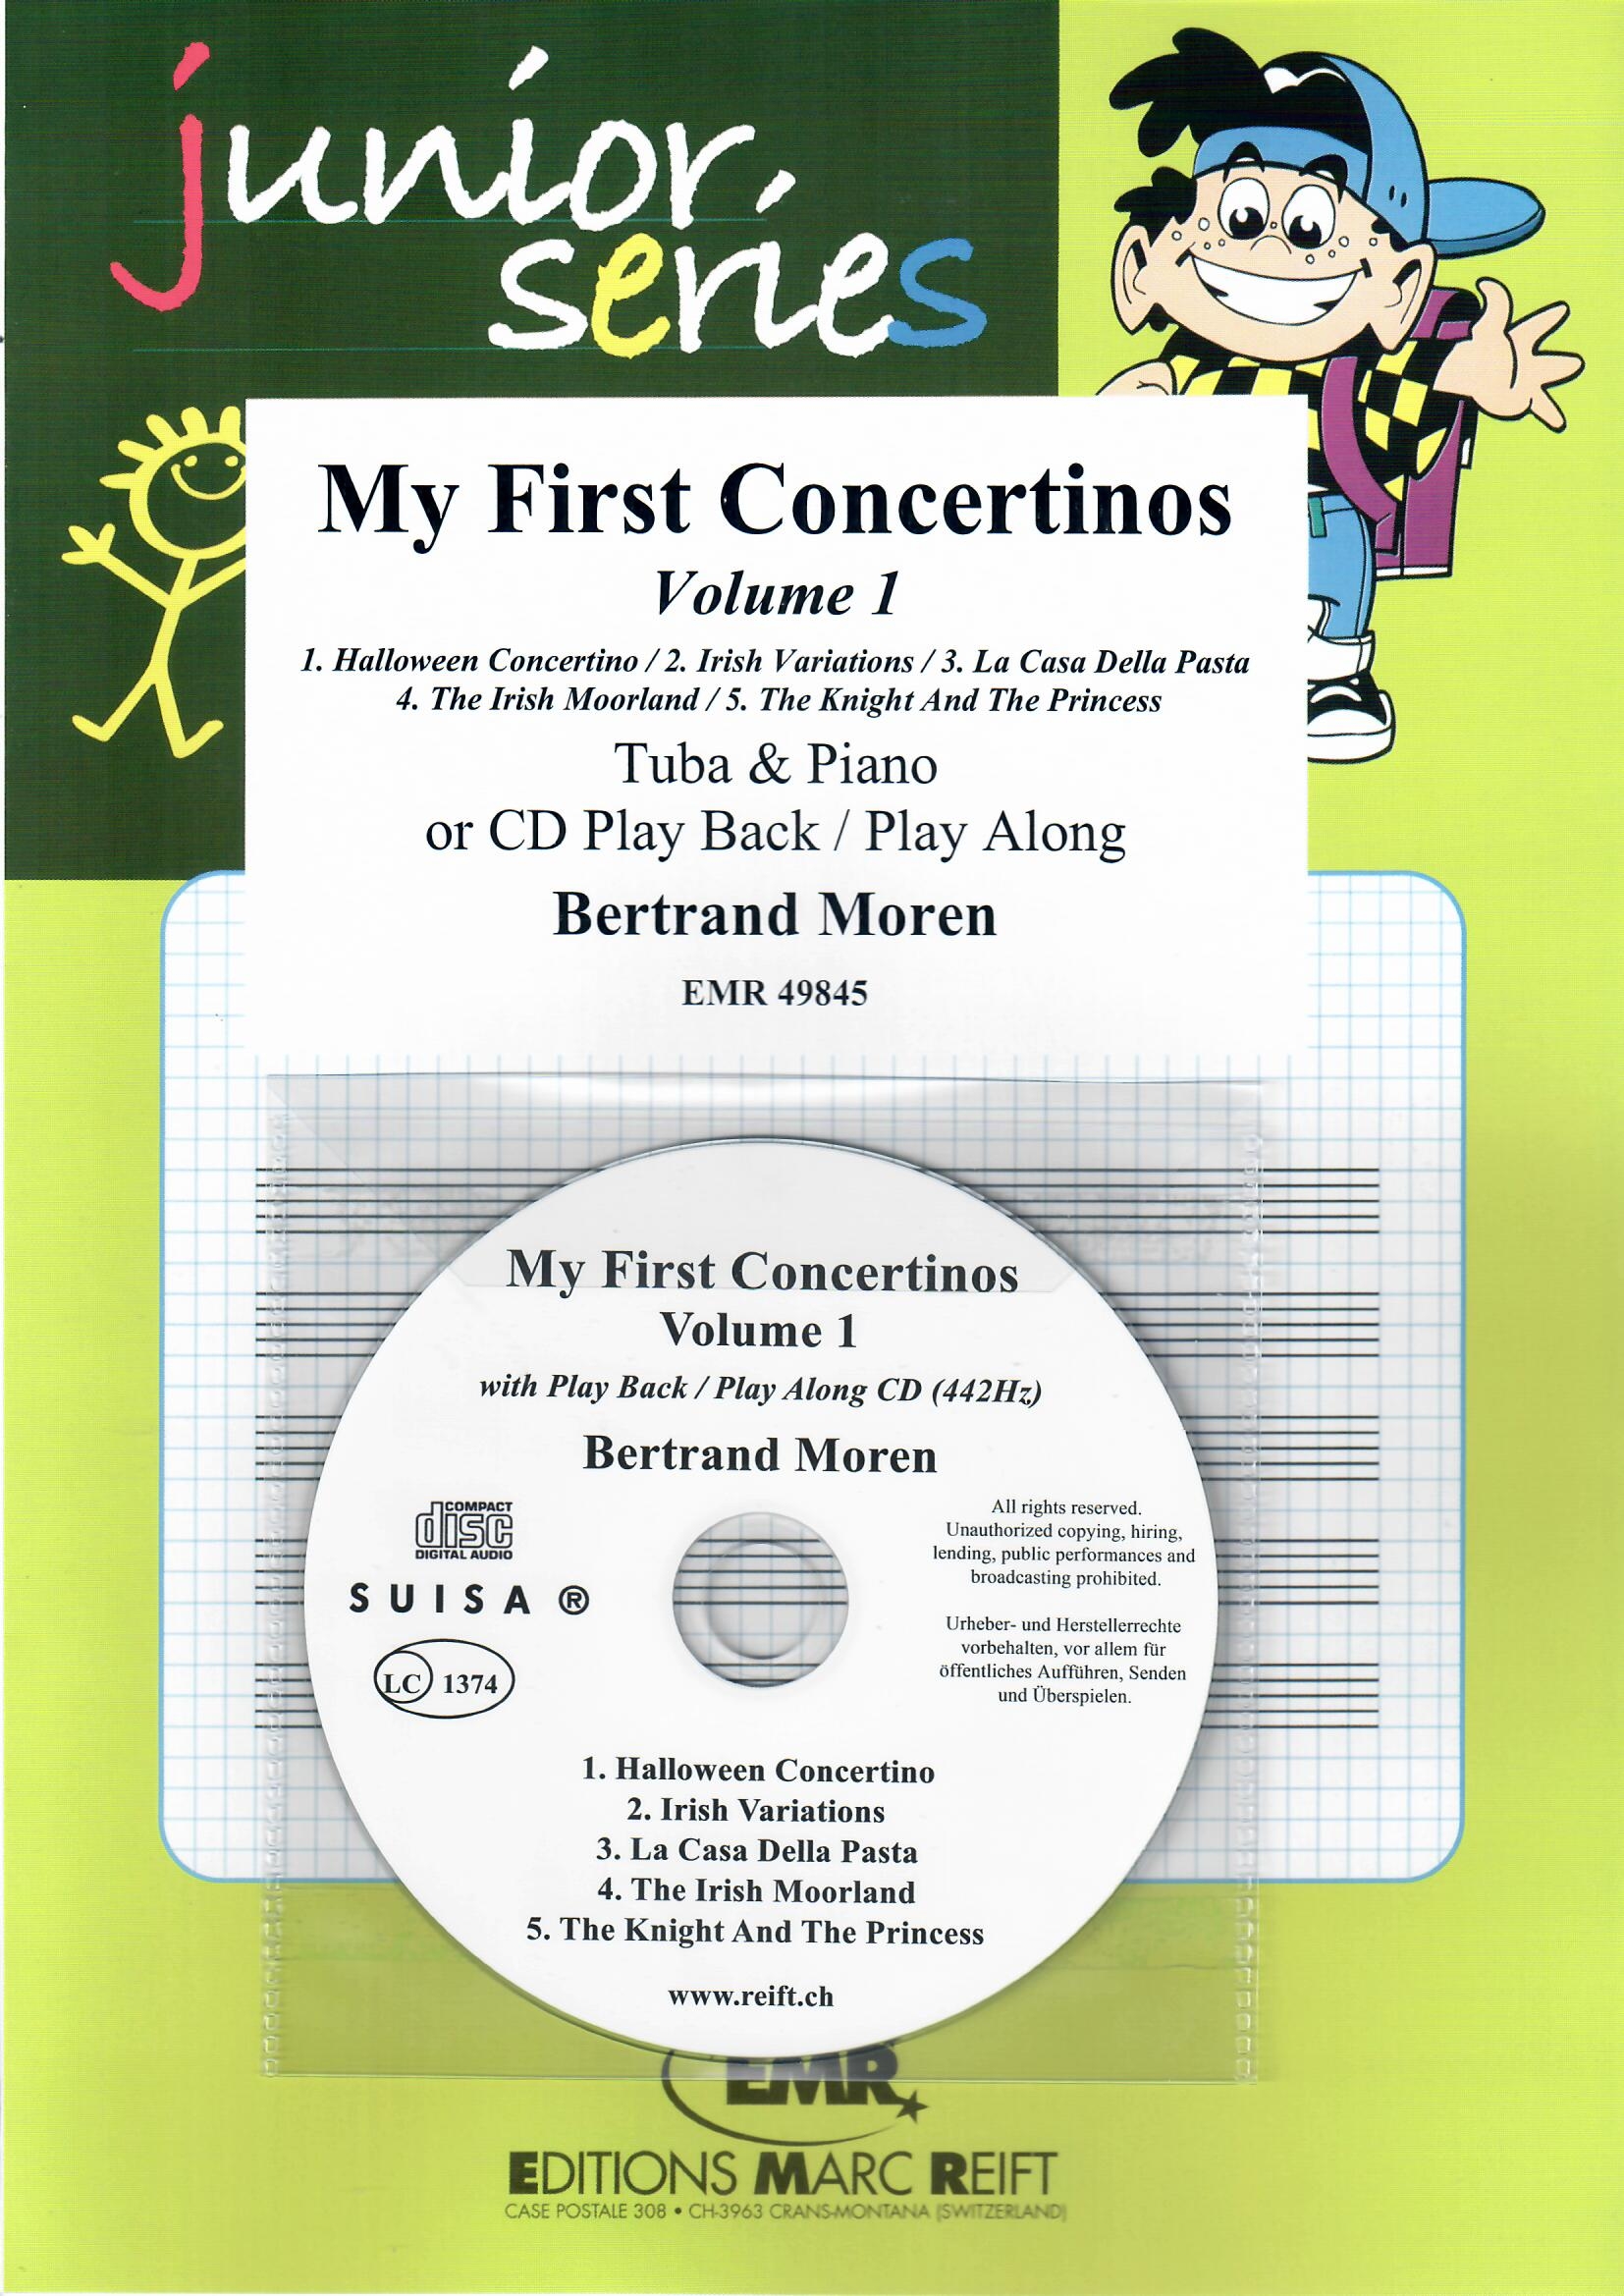 MY FIRST CONCERTINOS VOLUME 1 - Tuba & CD